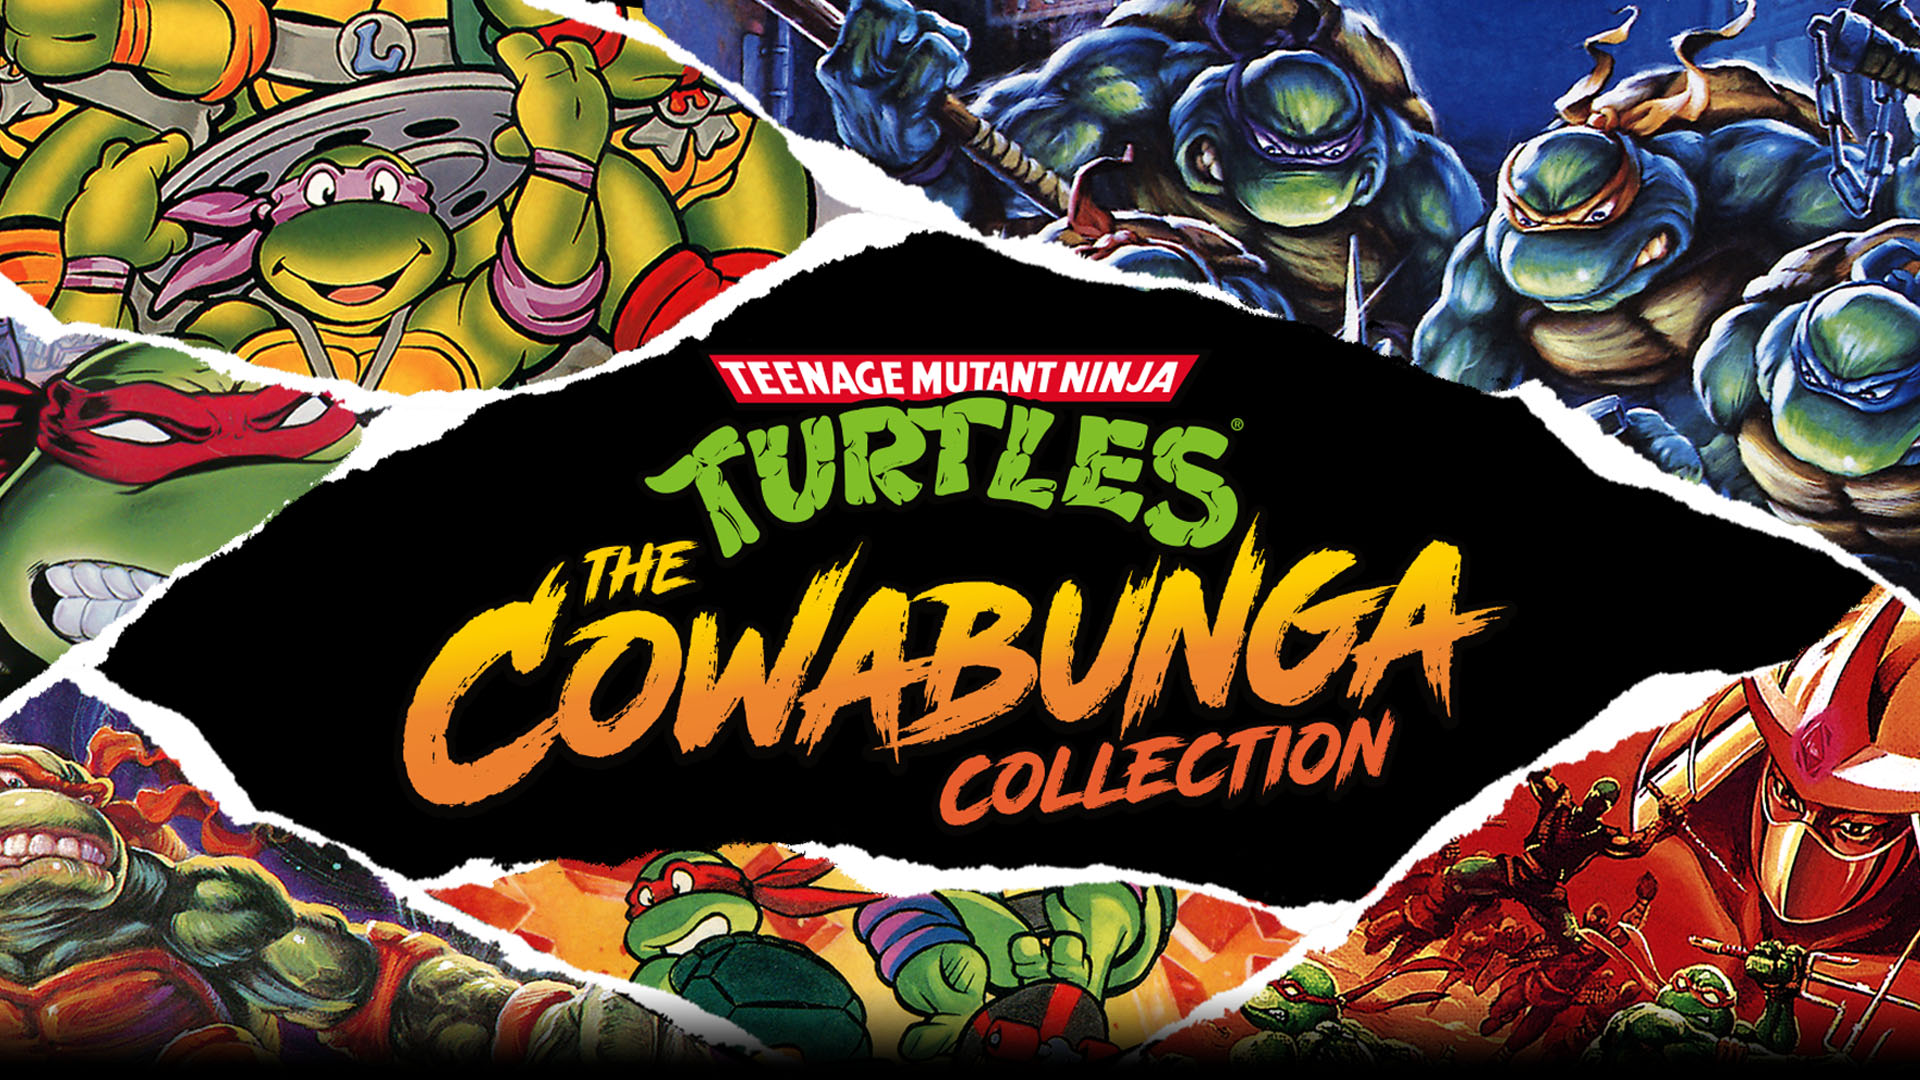 The Cowabunga Collection